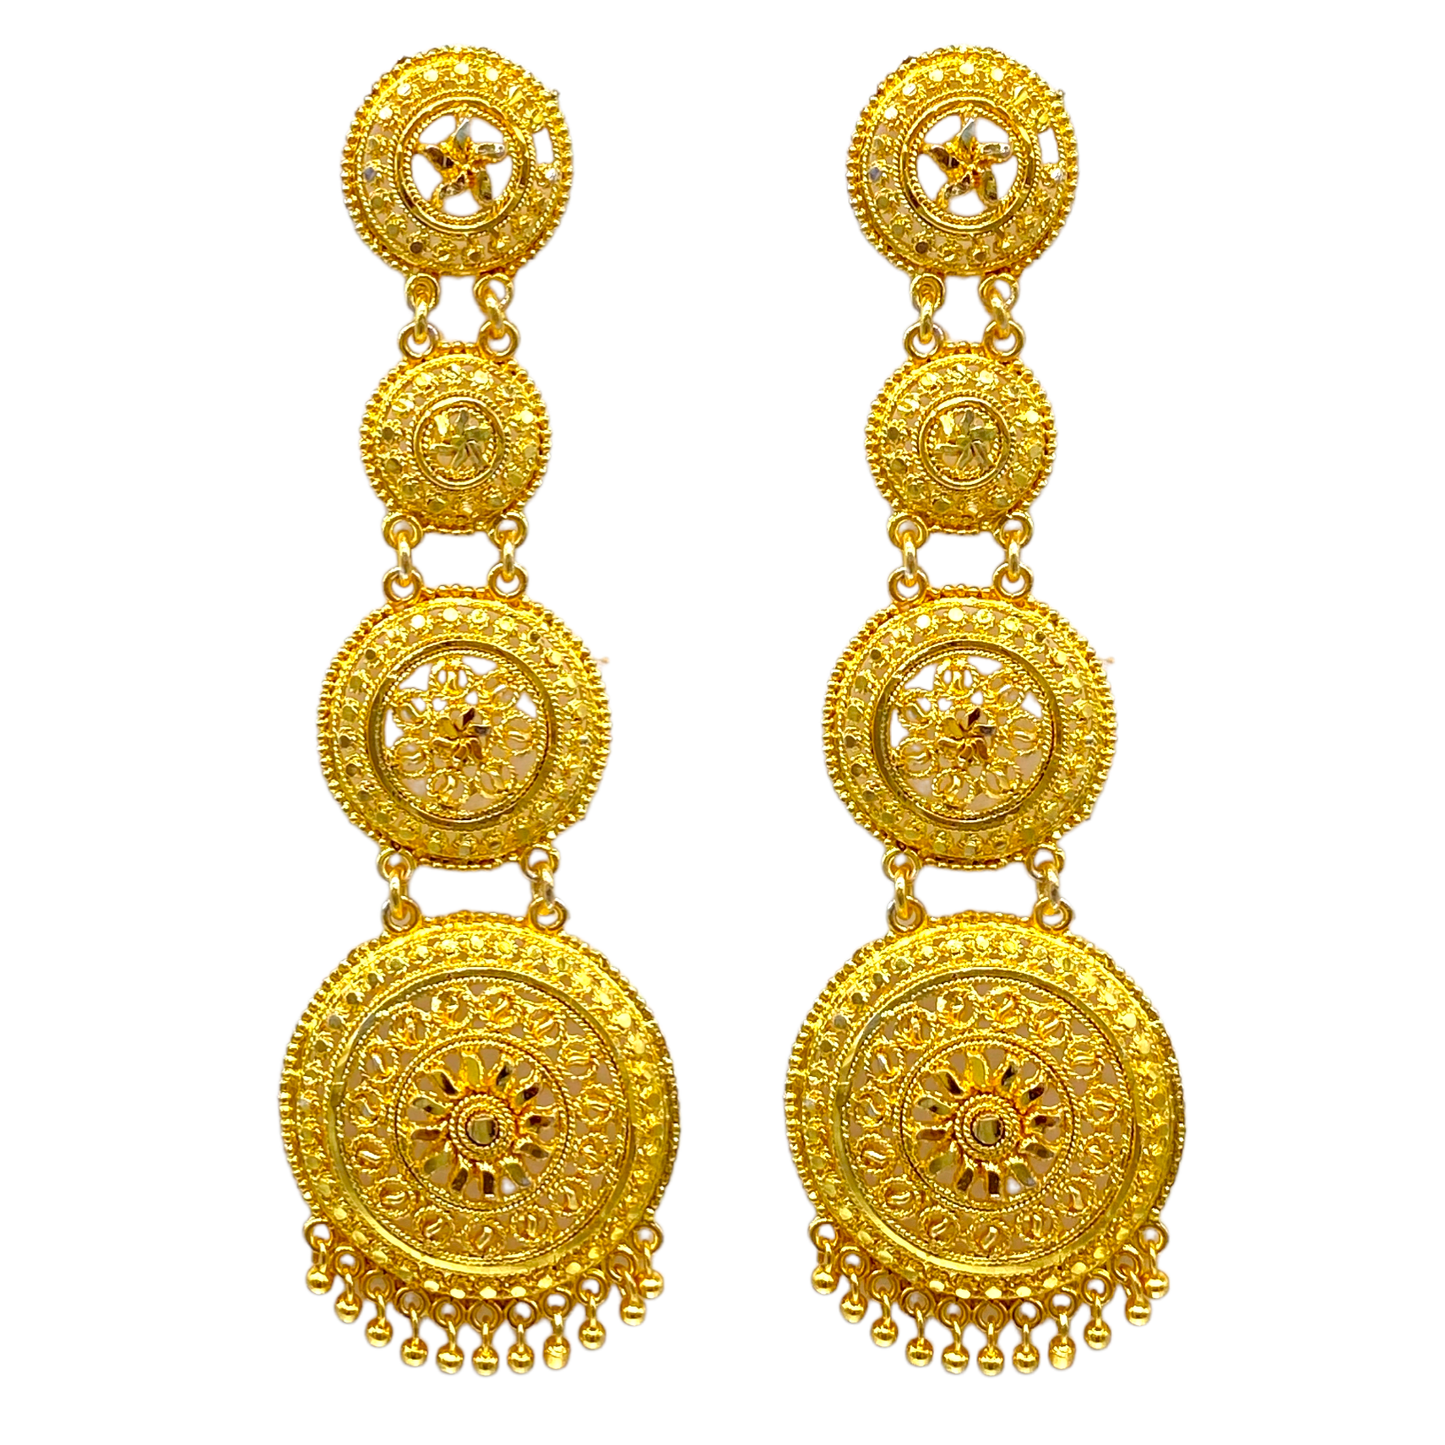 Triple Layerd Circular Design Gold Earrings